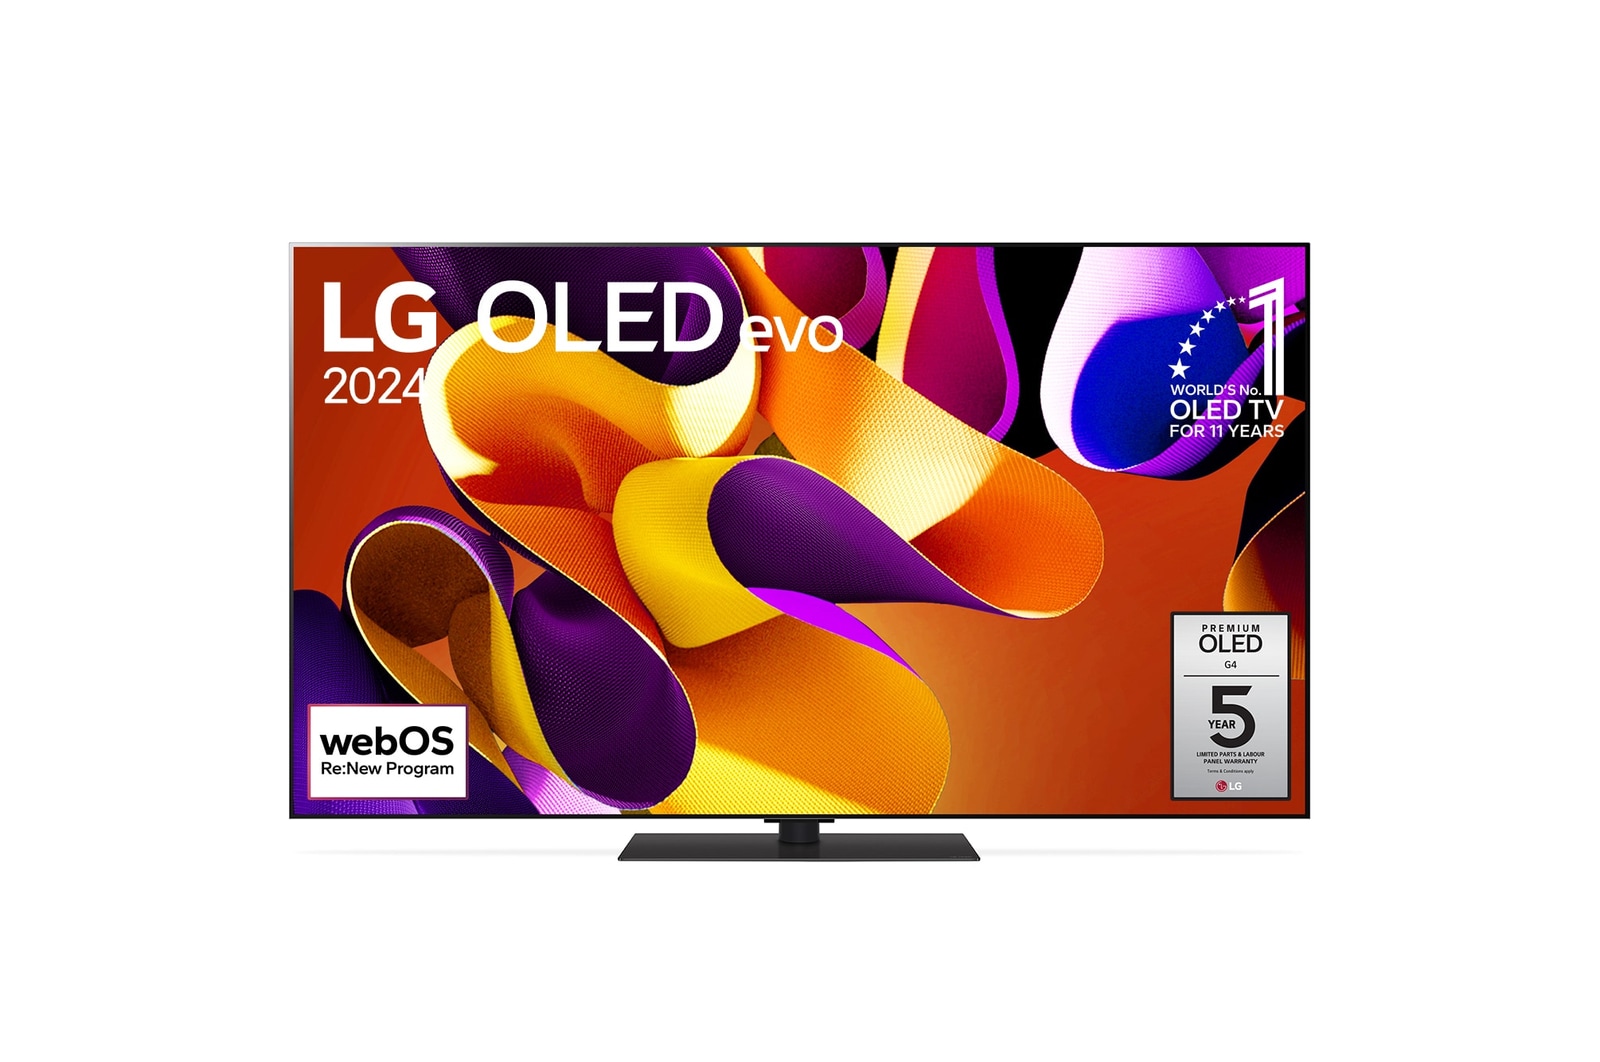 LG OLED evo G4 TV, OLED65G4SUB, with 11 Years of world number 1 OLED Emblem and 5-Year Panel Warranty logo on screen